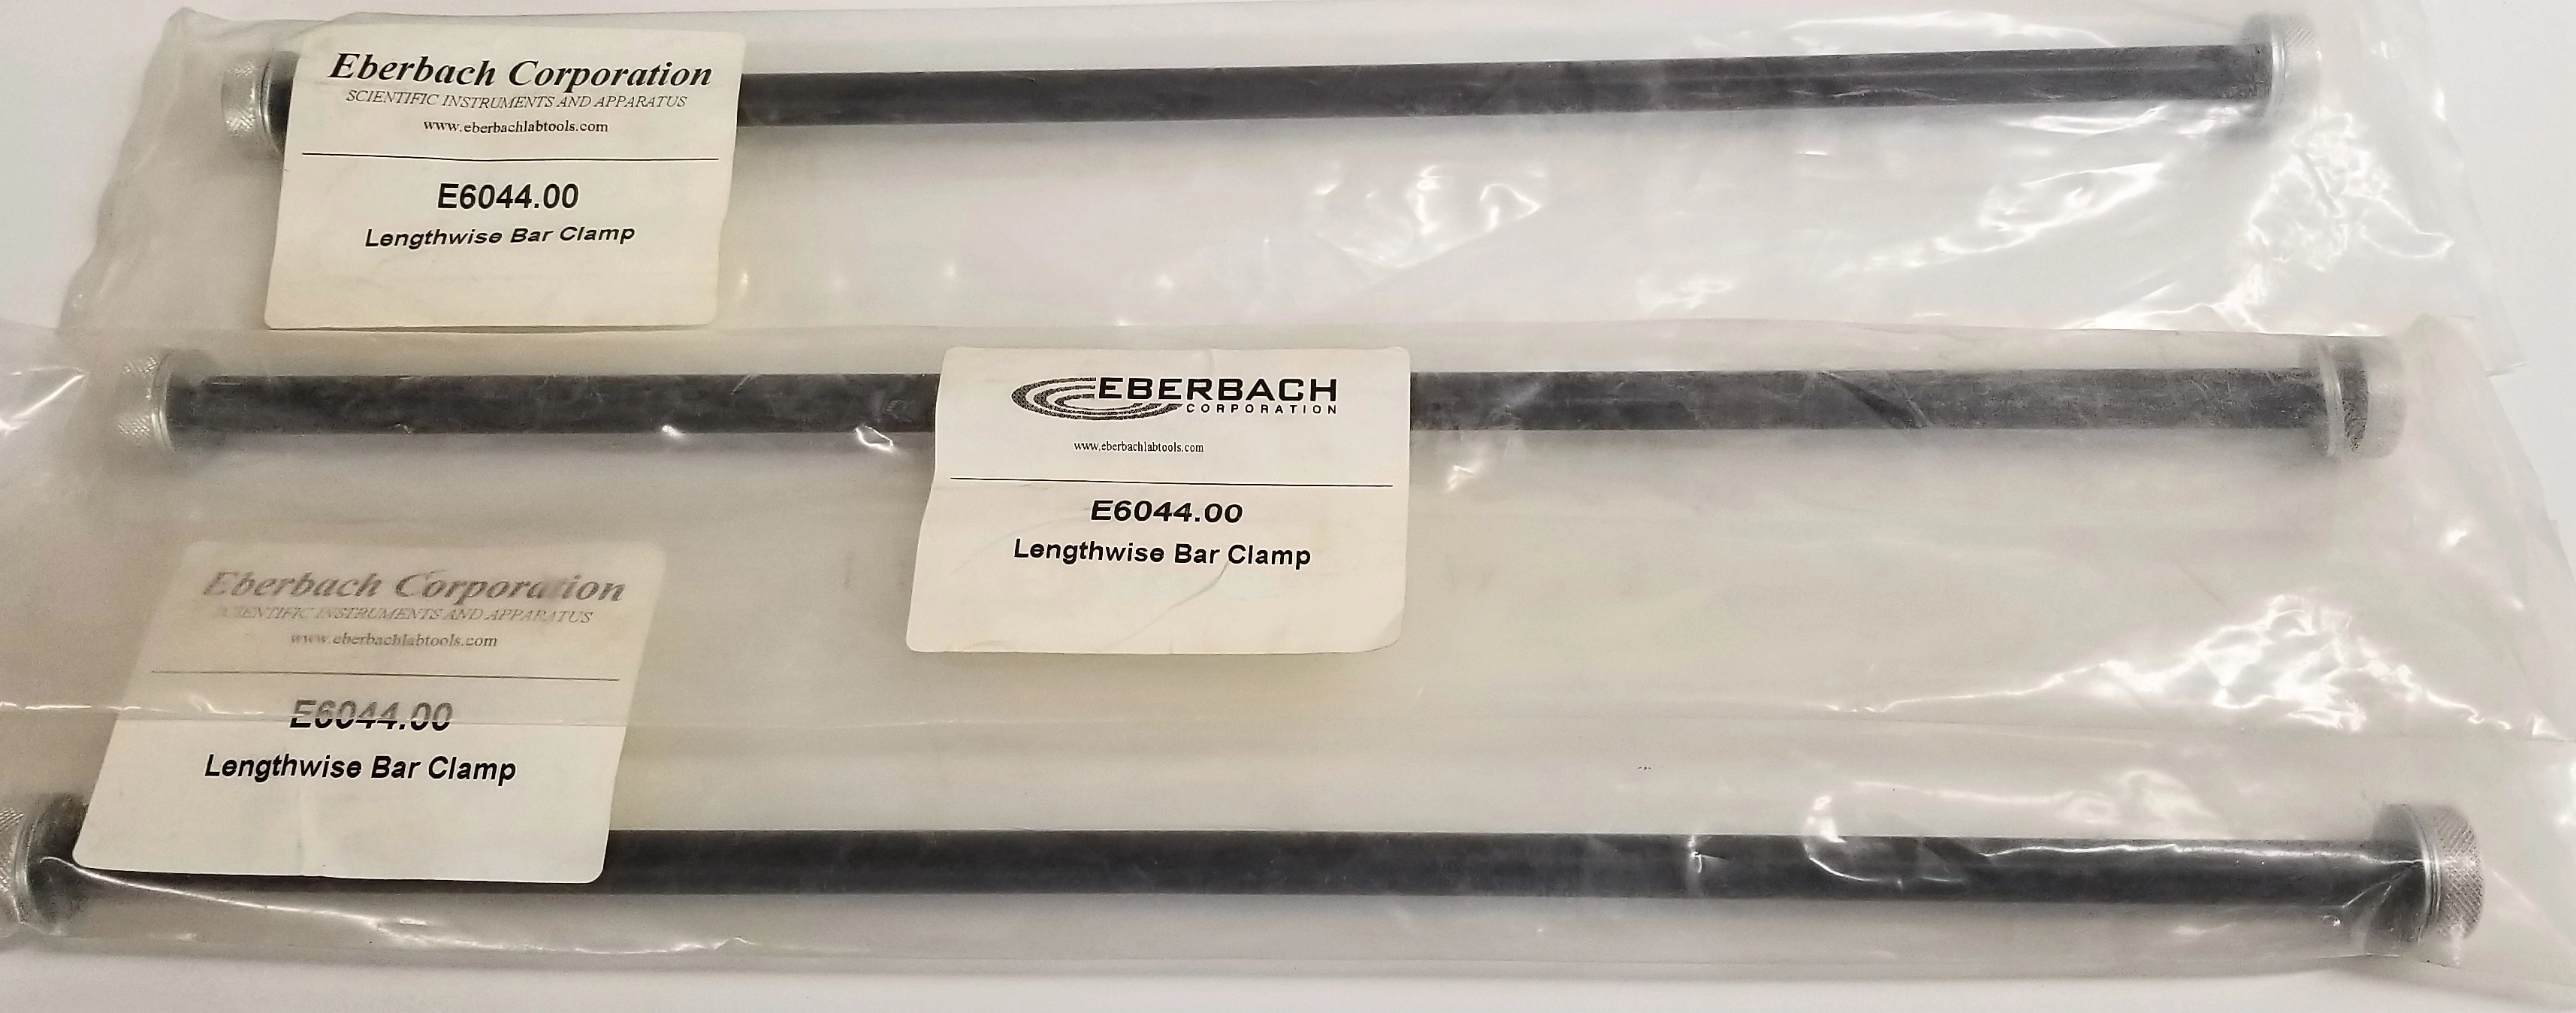 Eberbach E6044.00 Lengthwise Bar Clamps for Shaker - 19" Long